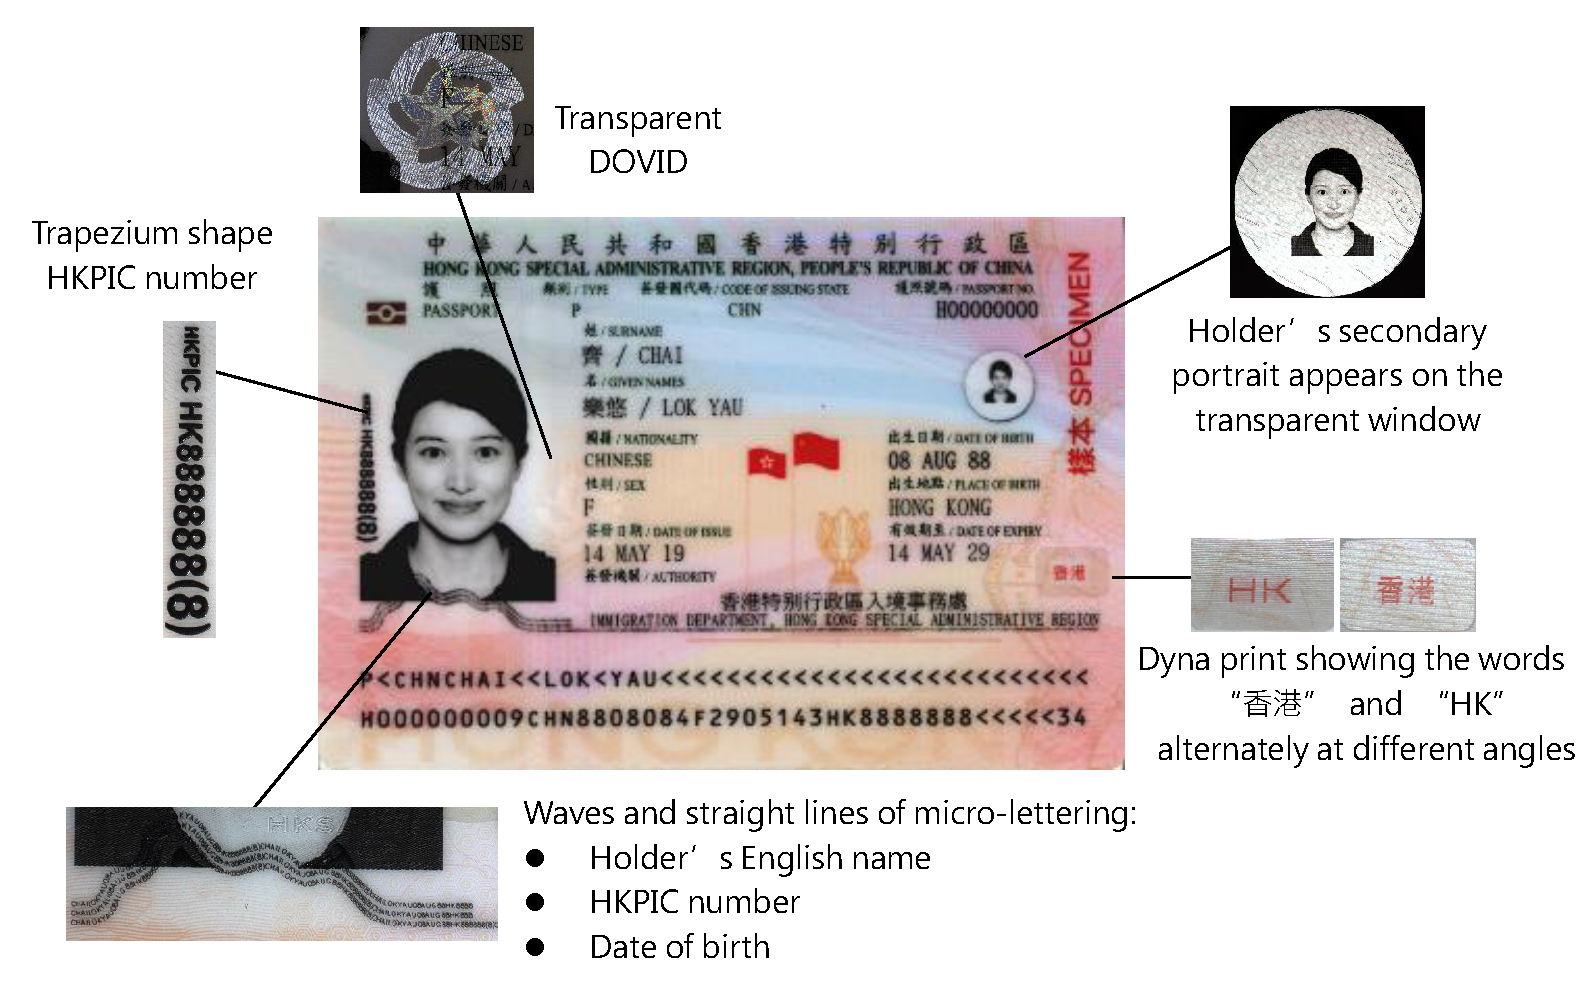 hong kong passport travel to france